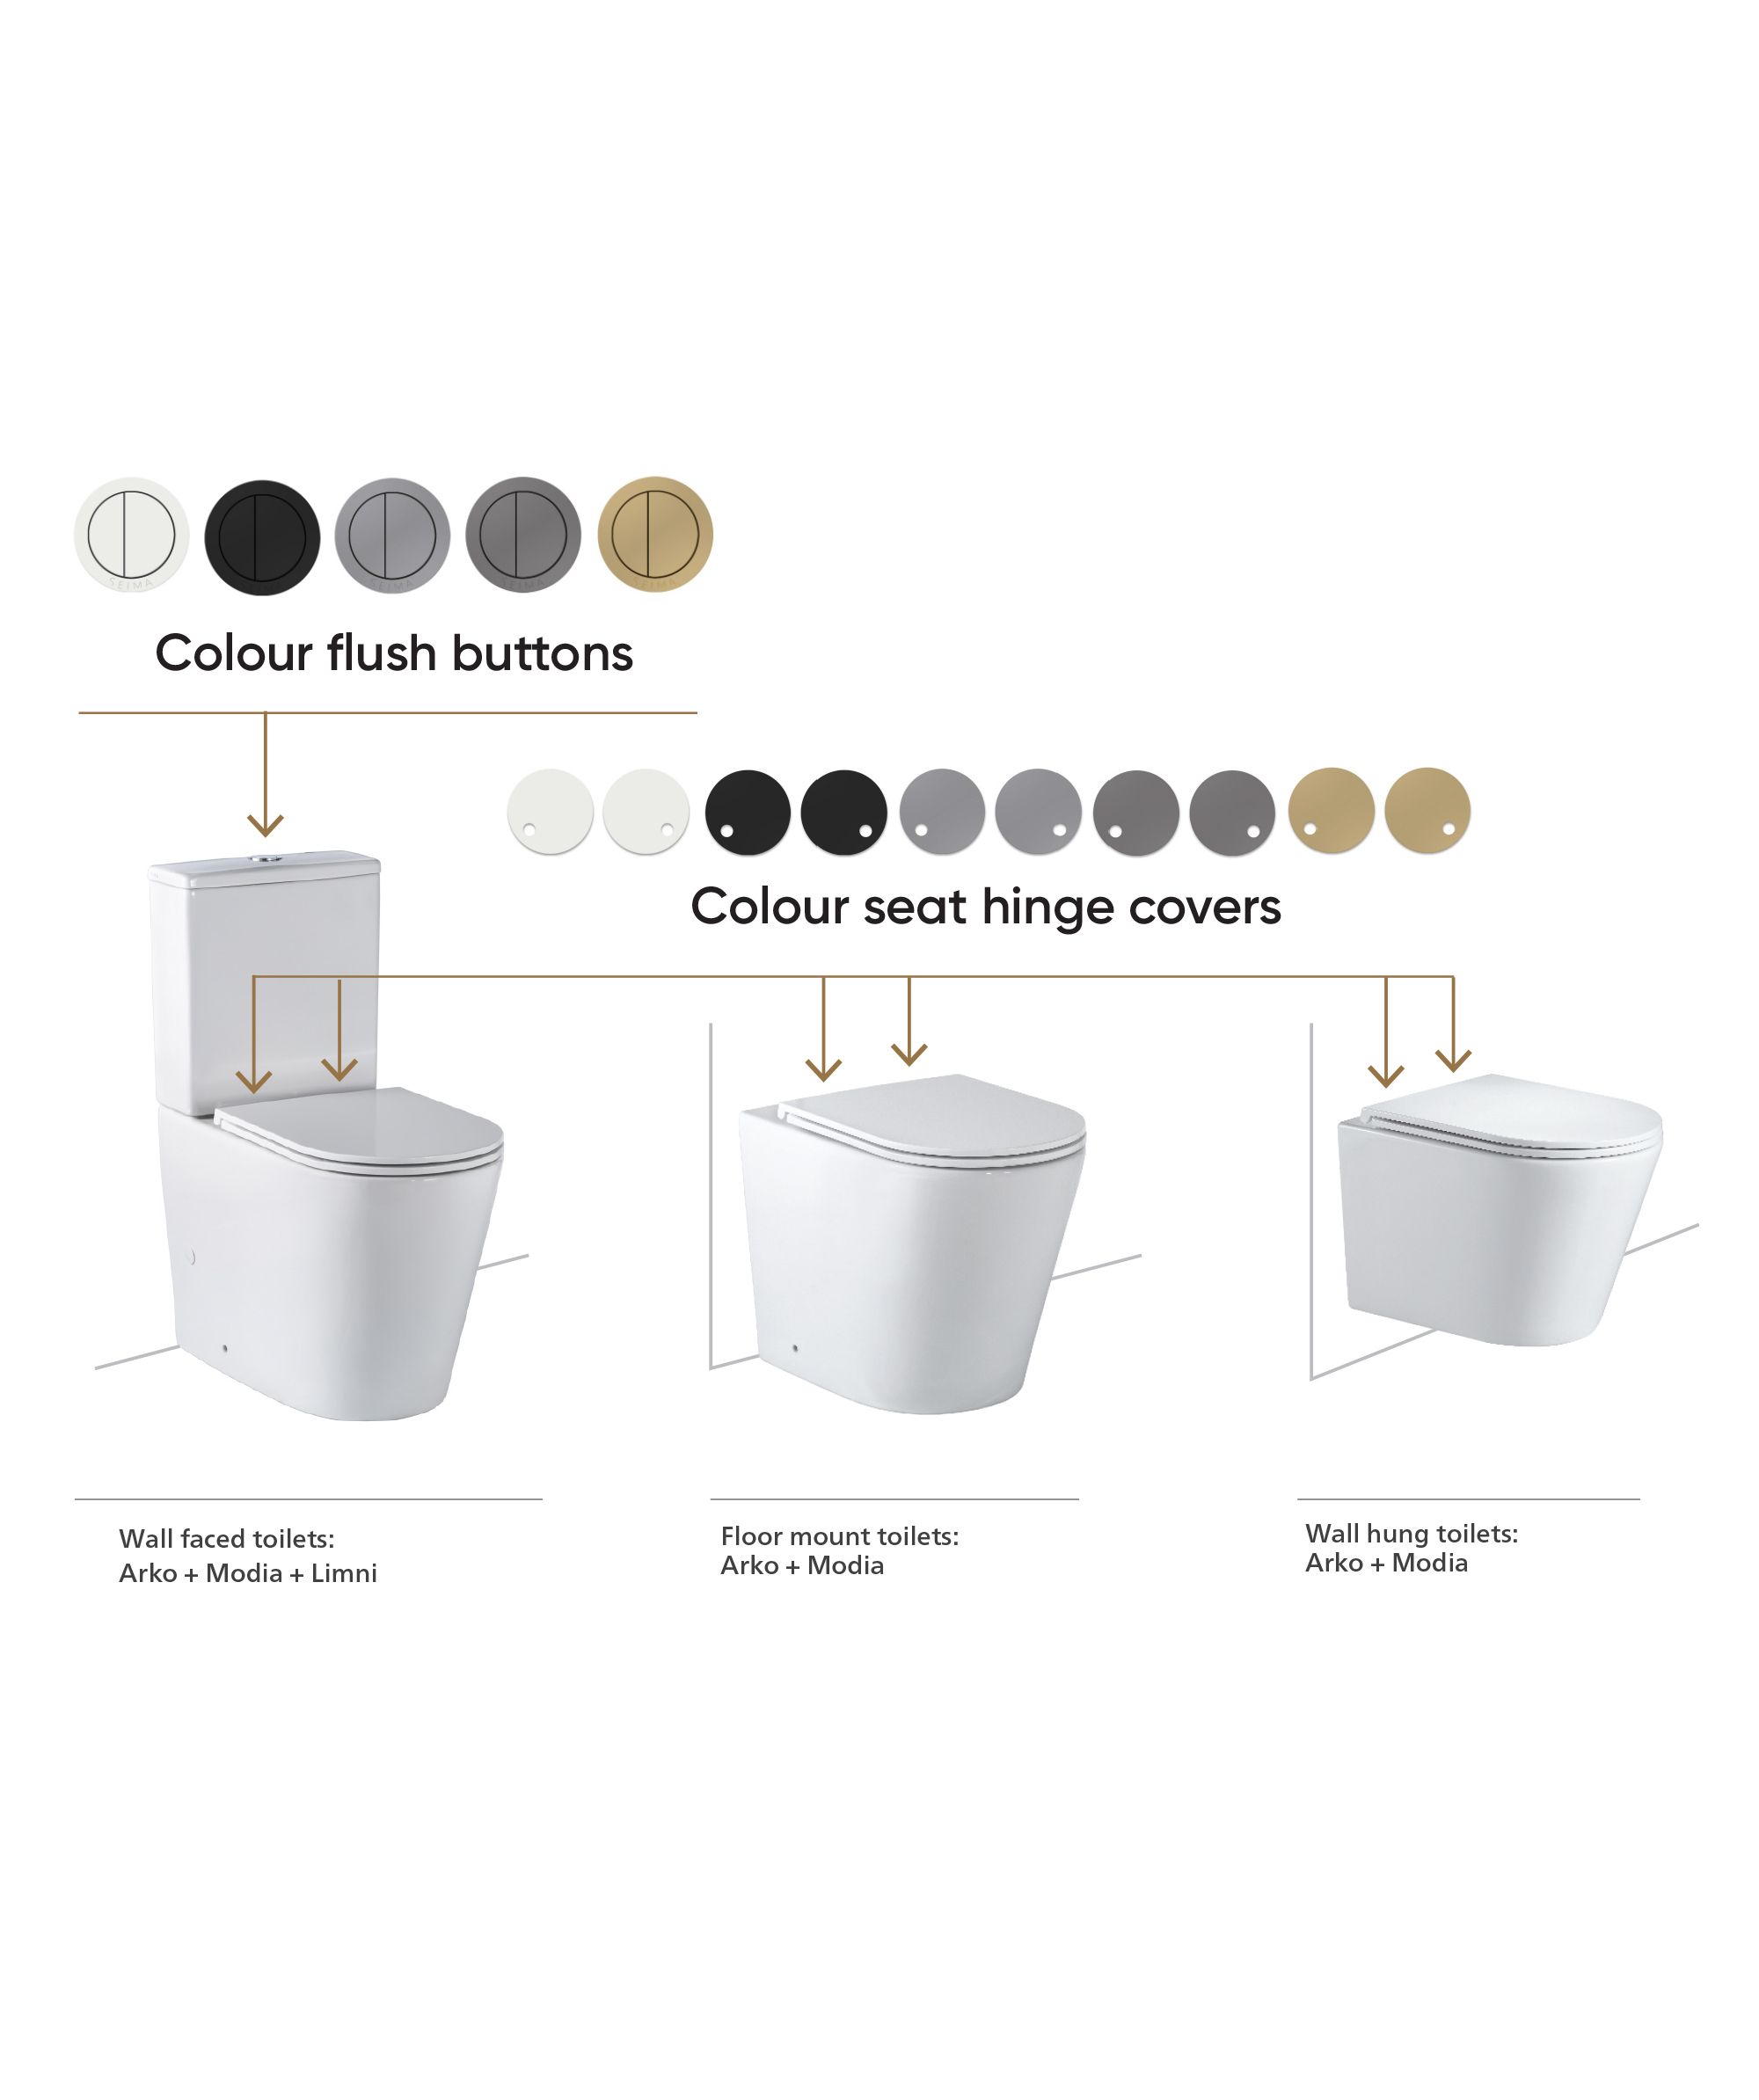 Toilet Colour - Colour Flush Buttons for Arko+Modia+Limni Wall Faced